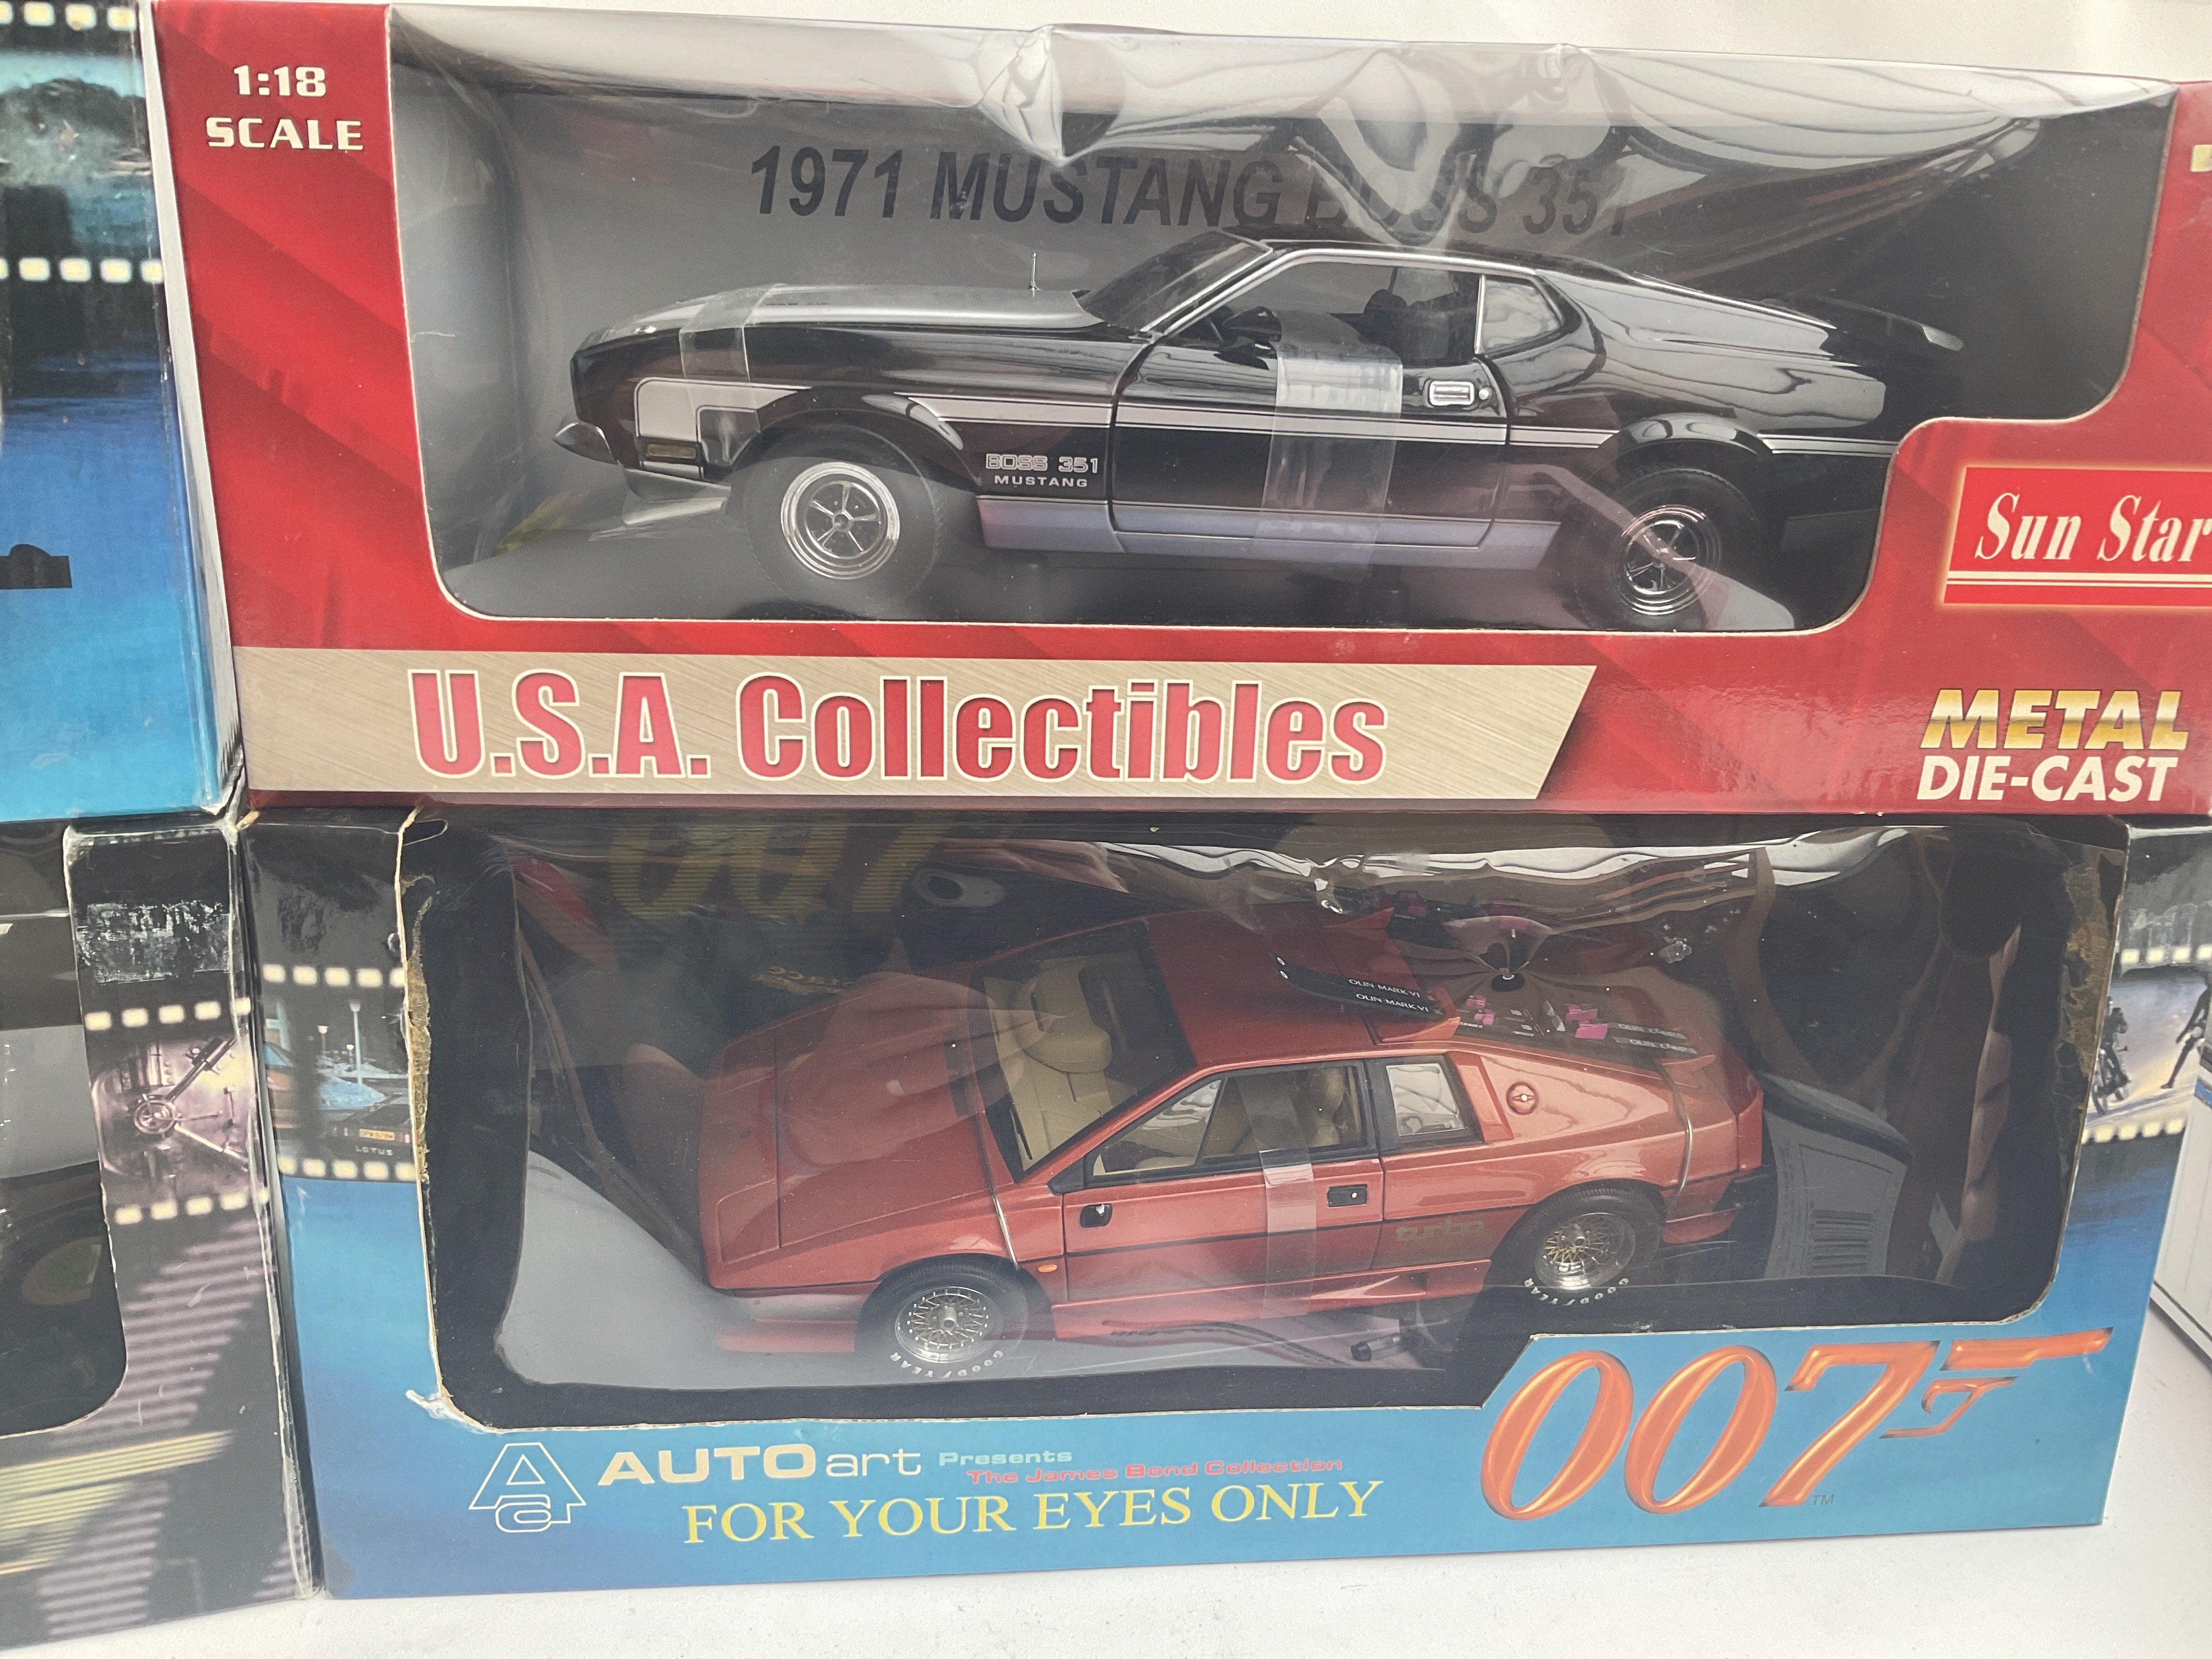 4 X Boxed Cars. 3 James Bond Autoart Cars and a Su - Image 3 of 3